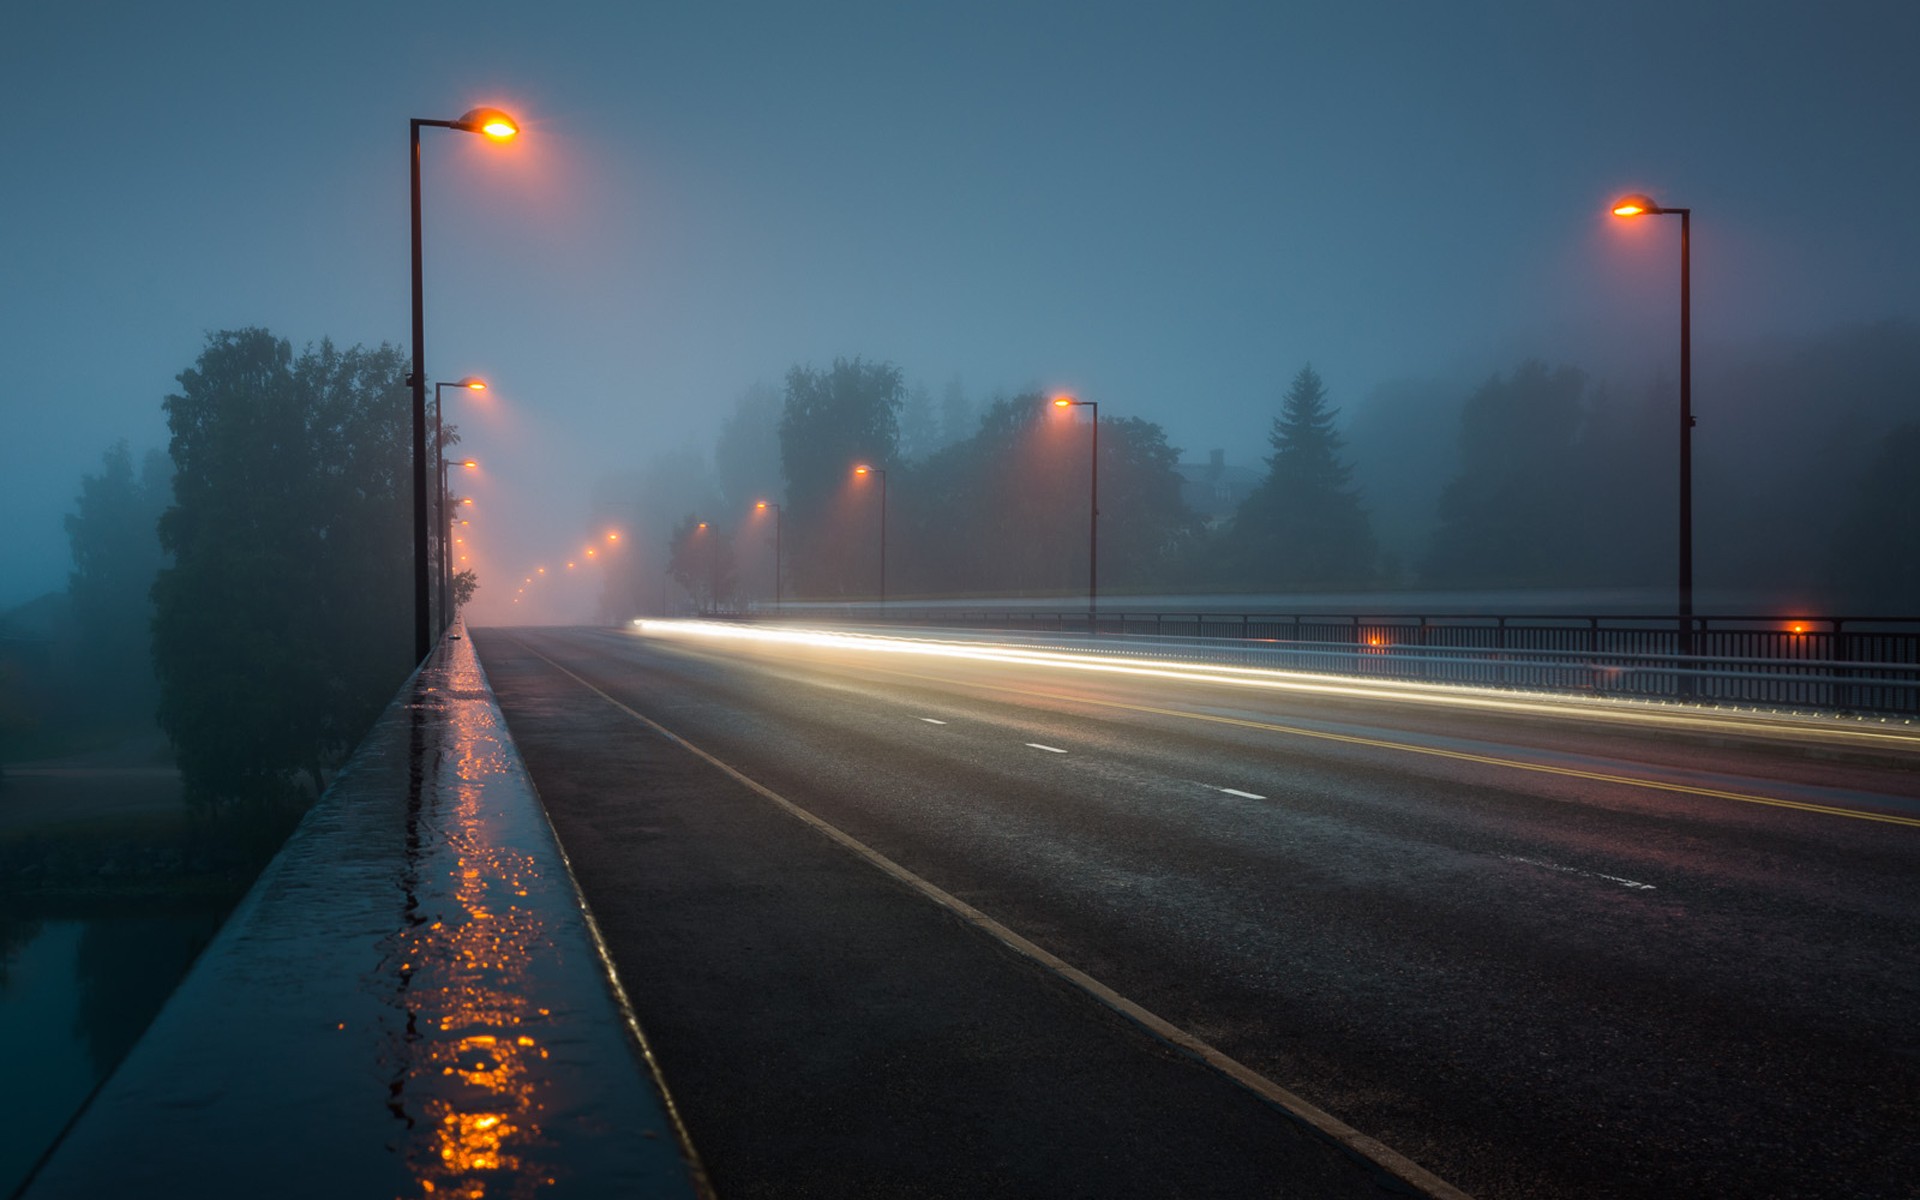 Foggy night bridge street lights